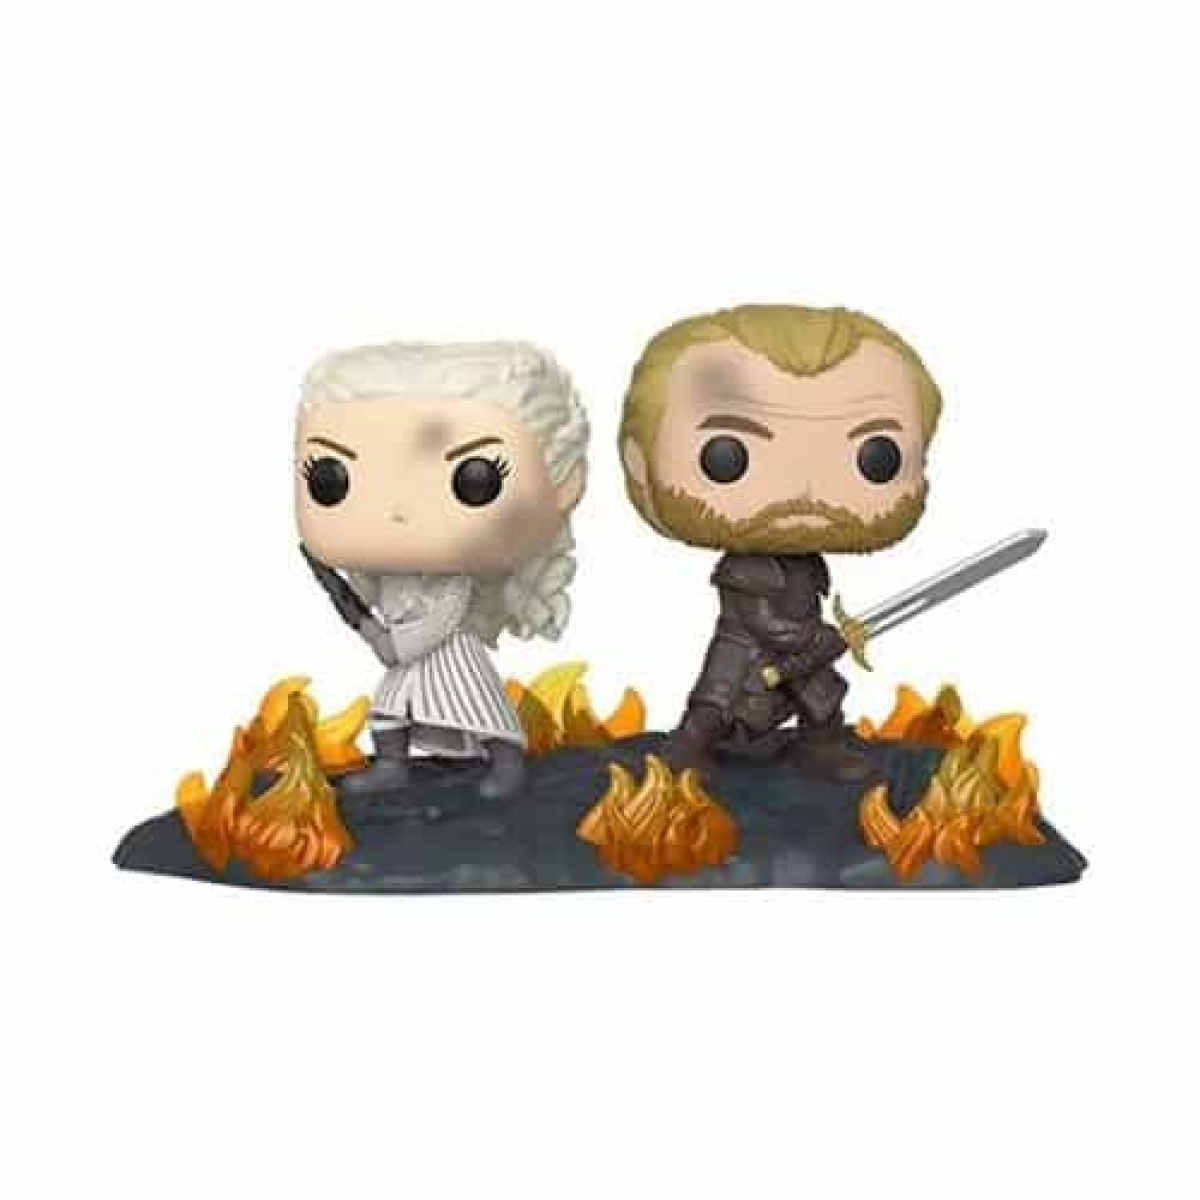 Funko Pop! Game of Thrones Daenerys and Jorah with Swords Pop! Vinyl Moment